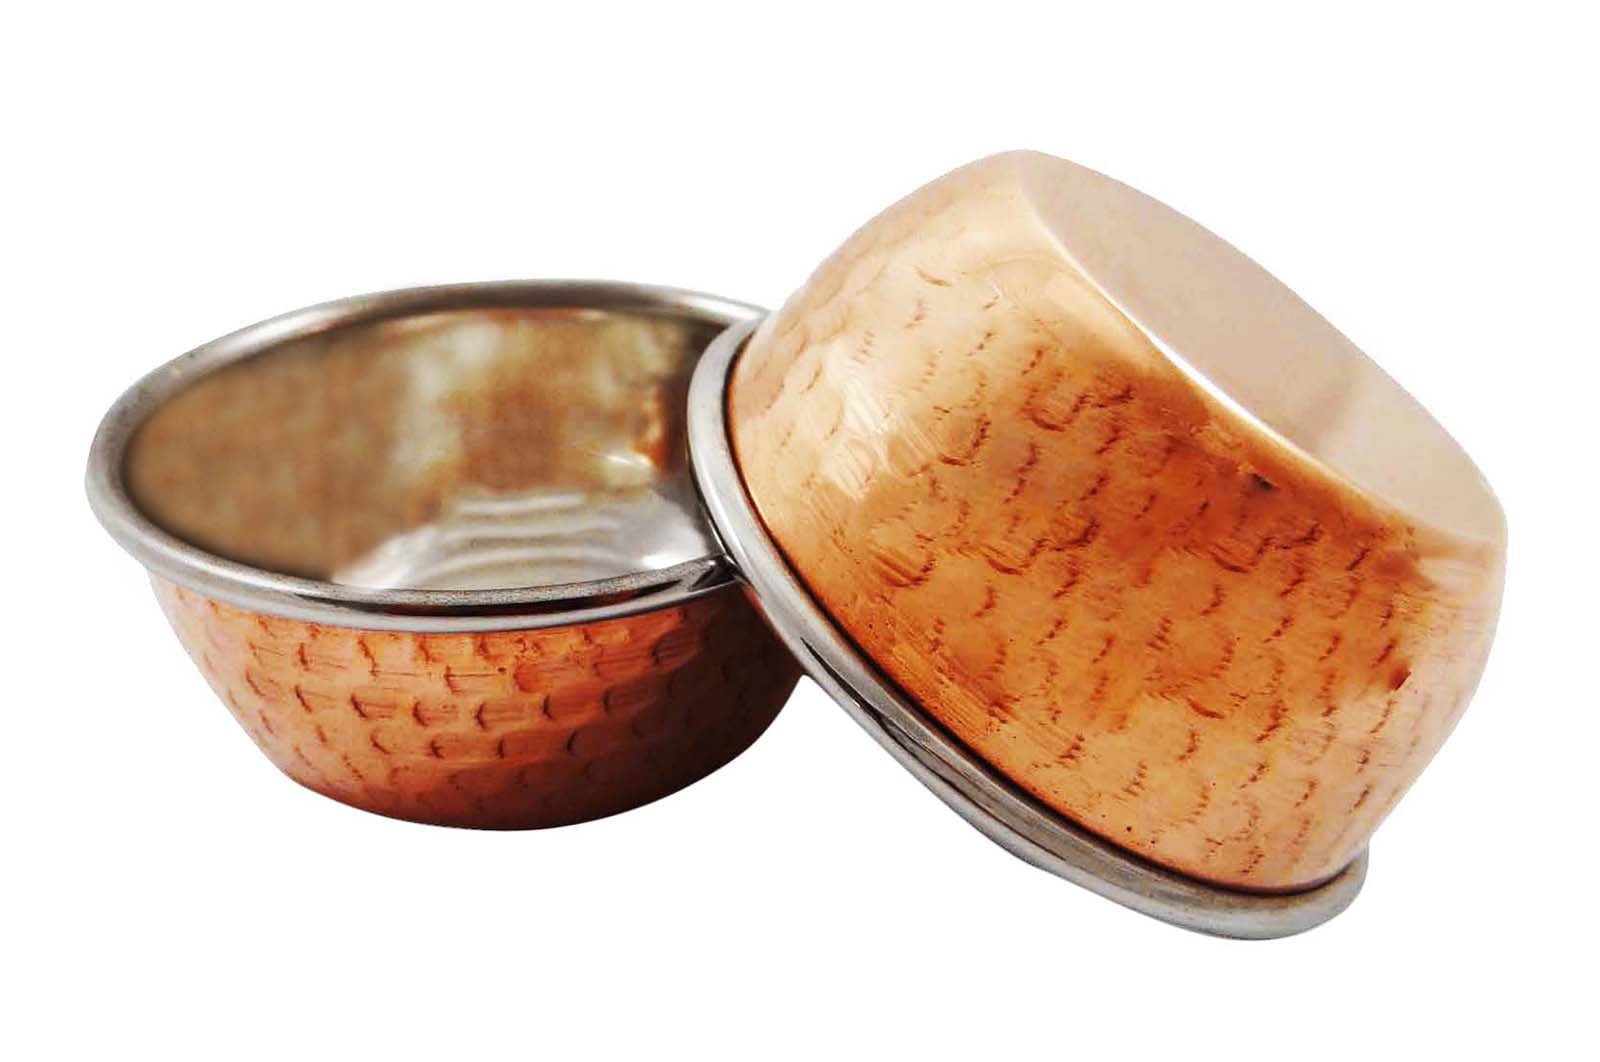 Copper/Stainless Steel Kadai serving bowl # 1 - 12 Oz. — Nishi